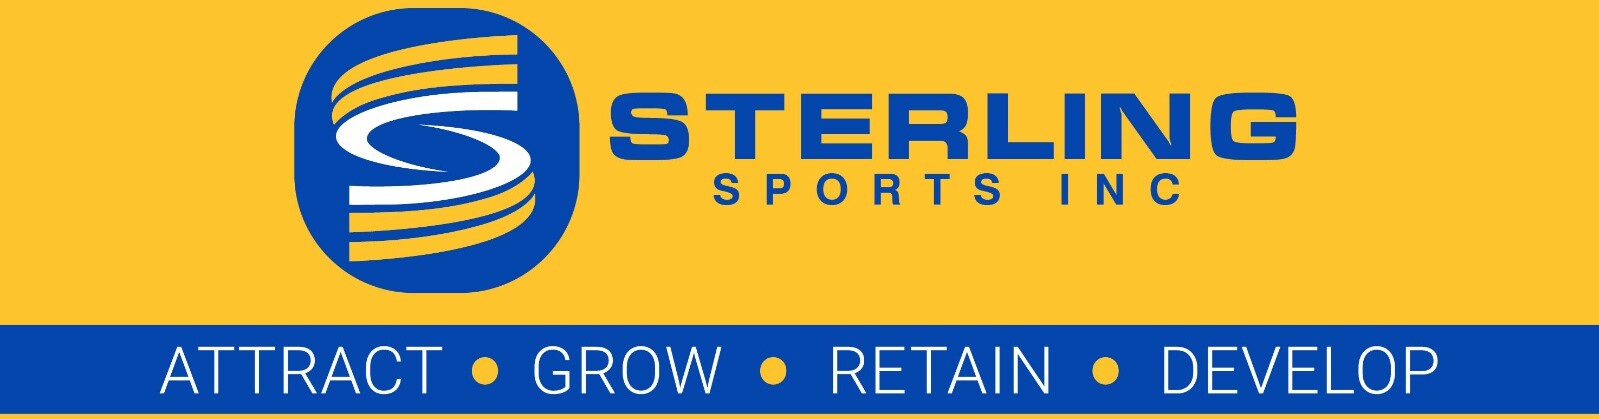 Sterling Sports & Arts Inc